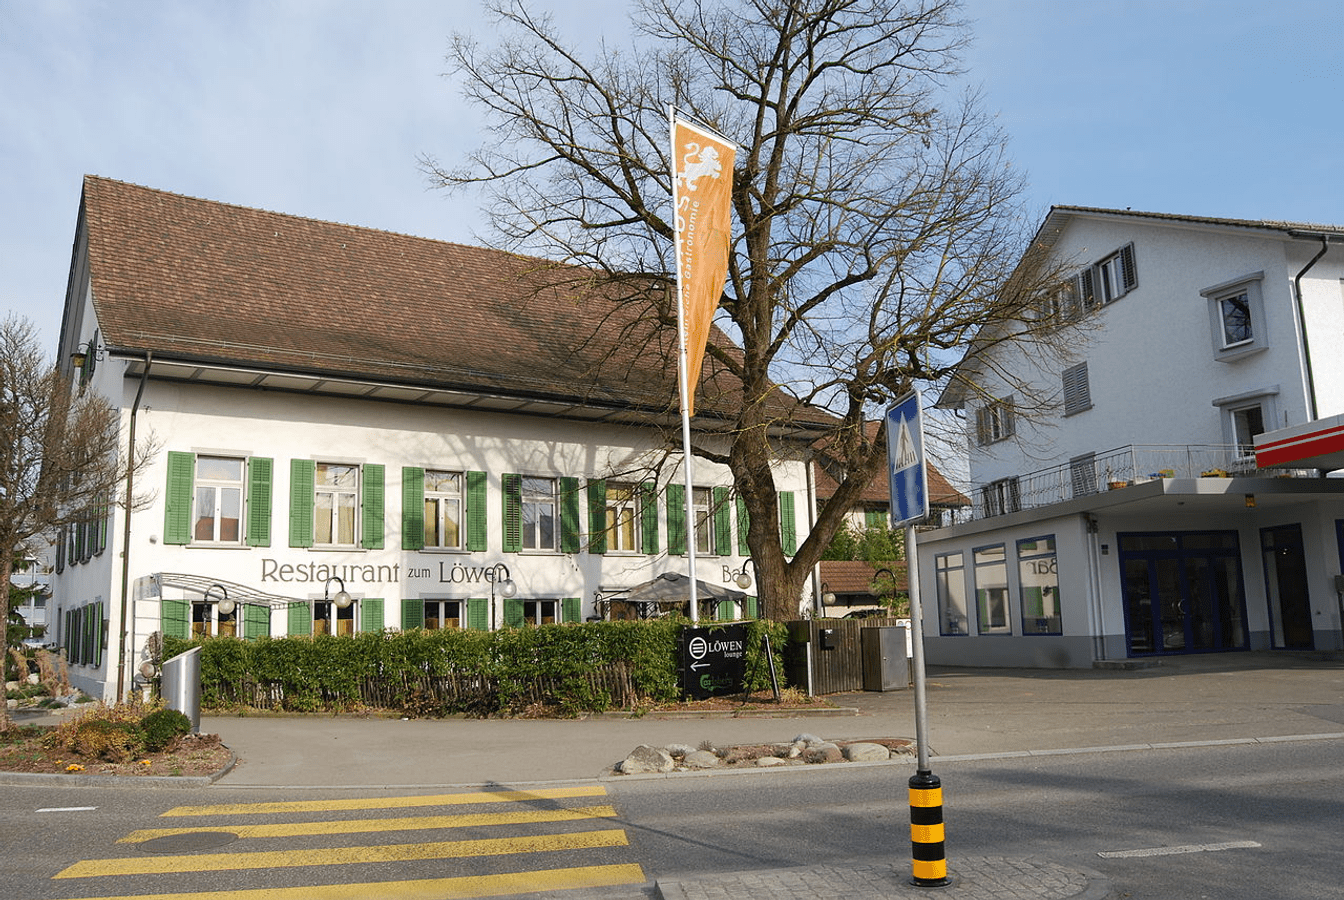 Restaurant Löwen in Niederglatt, Kanton Zürich, Schweiz